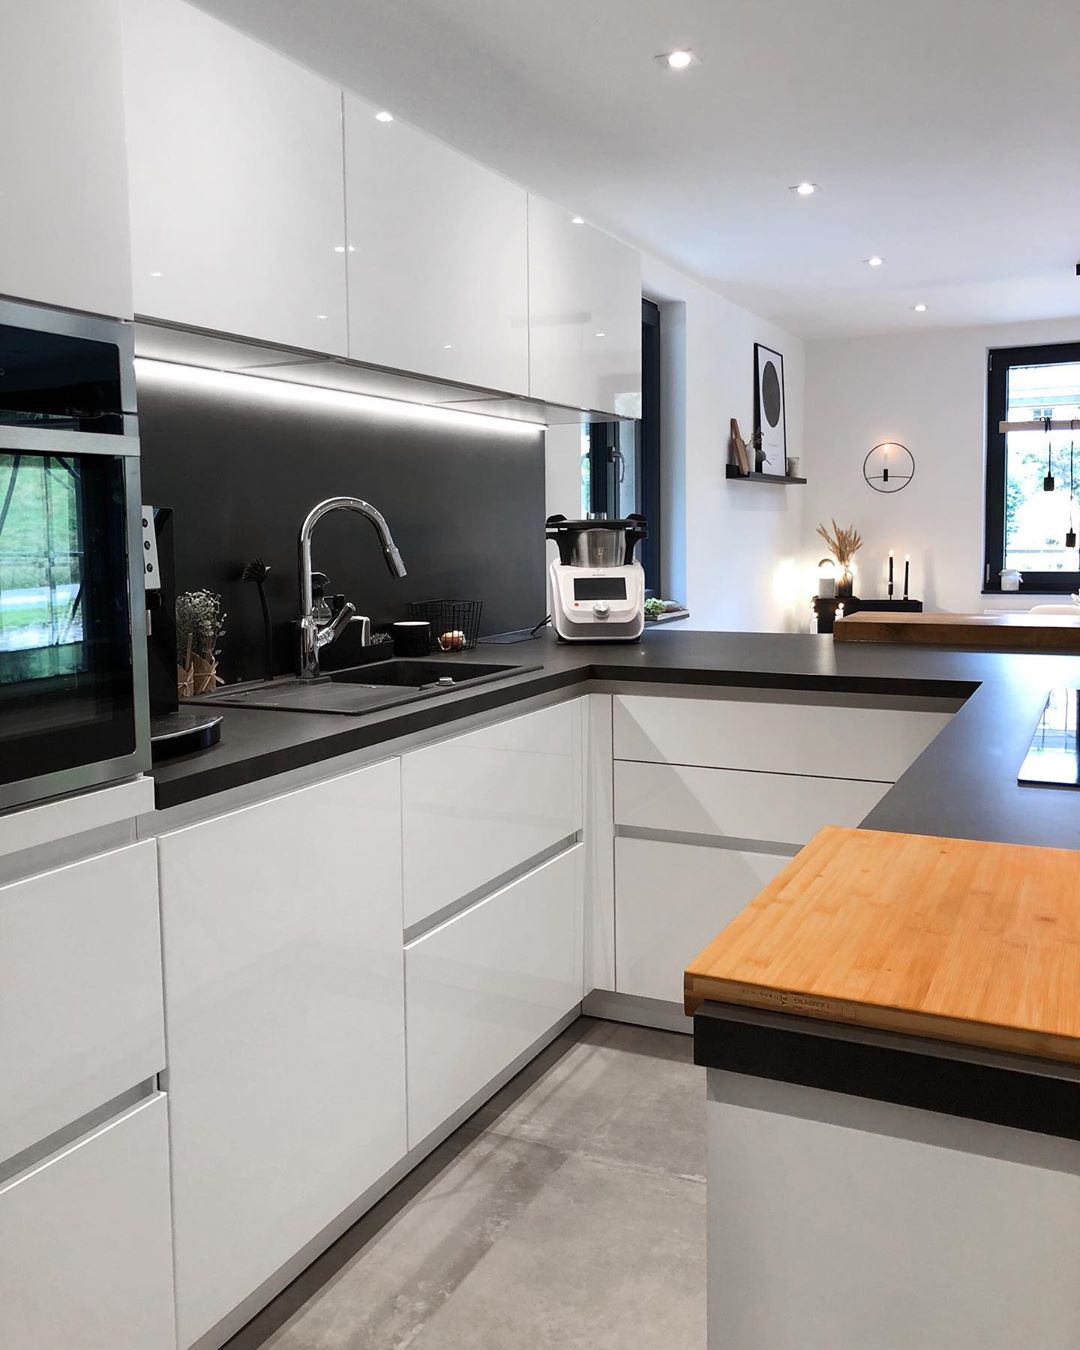 Modern kitchen with no hardware on cabinets. Photo by Instagram user @grey_interior_love